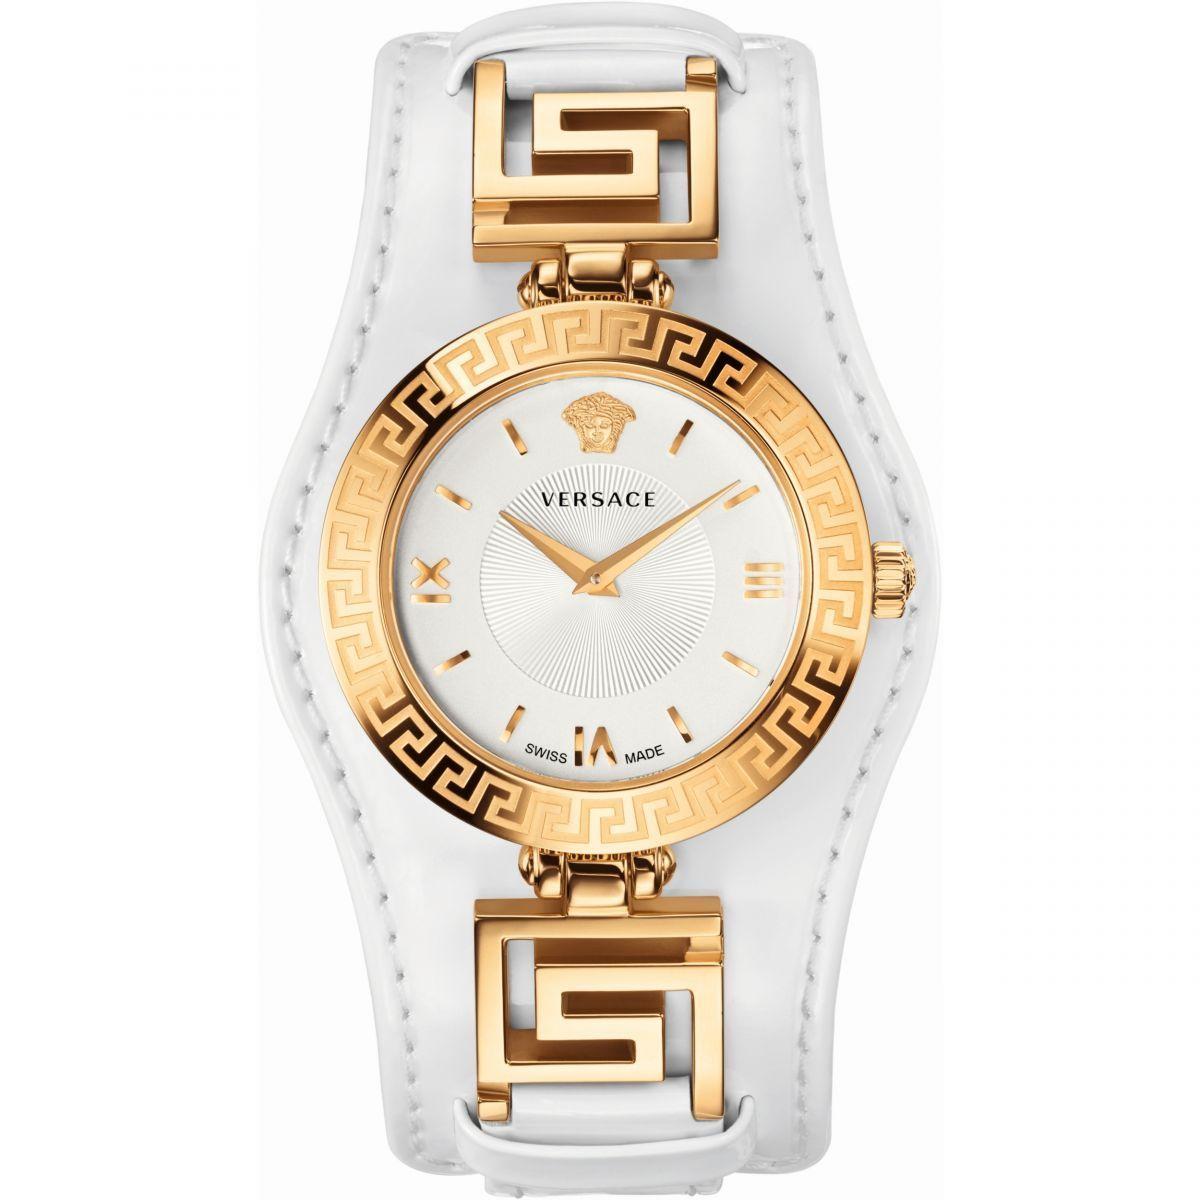 Authentic New Versace V-Signature Gold-Plated Quartz Watch